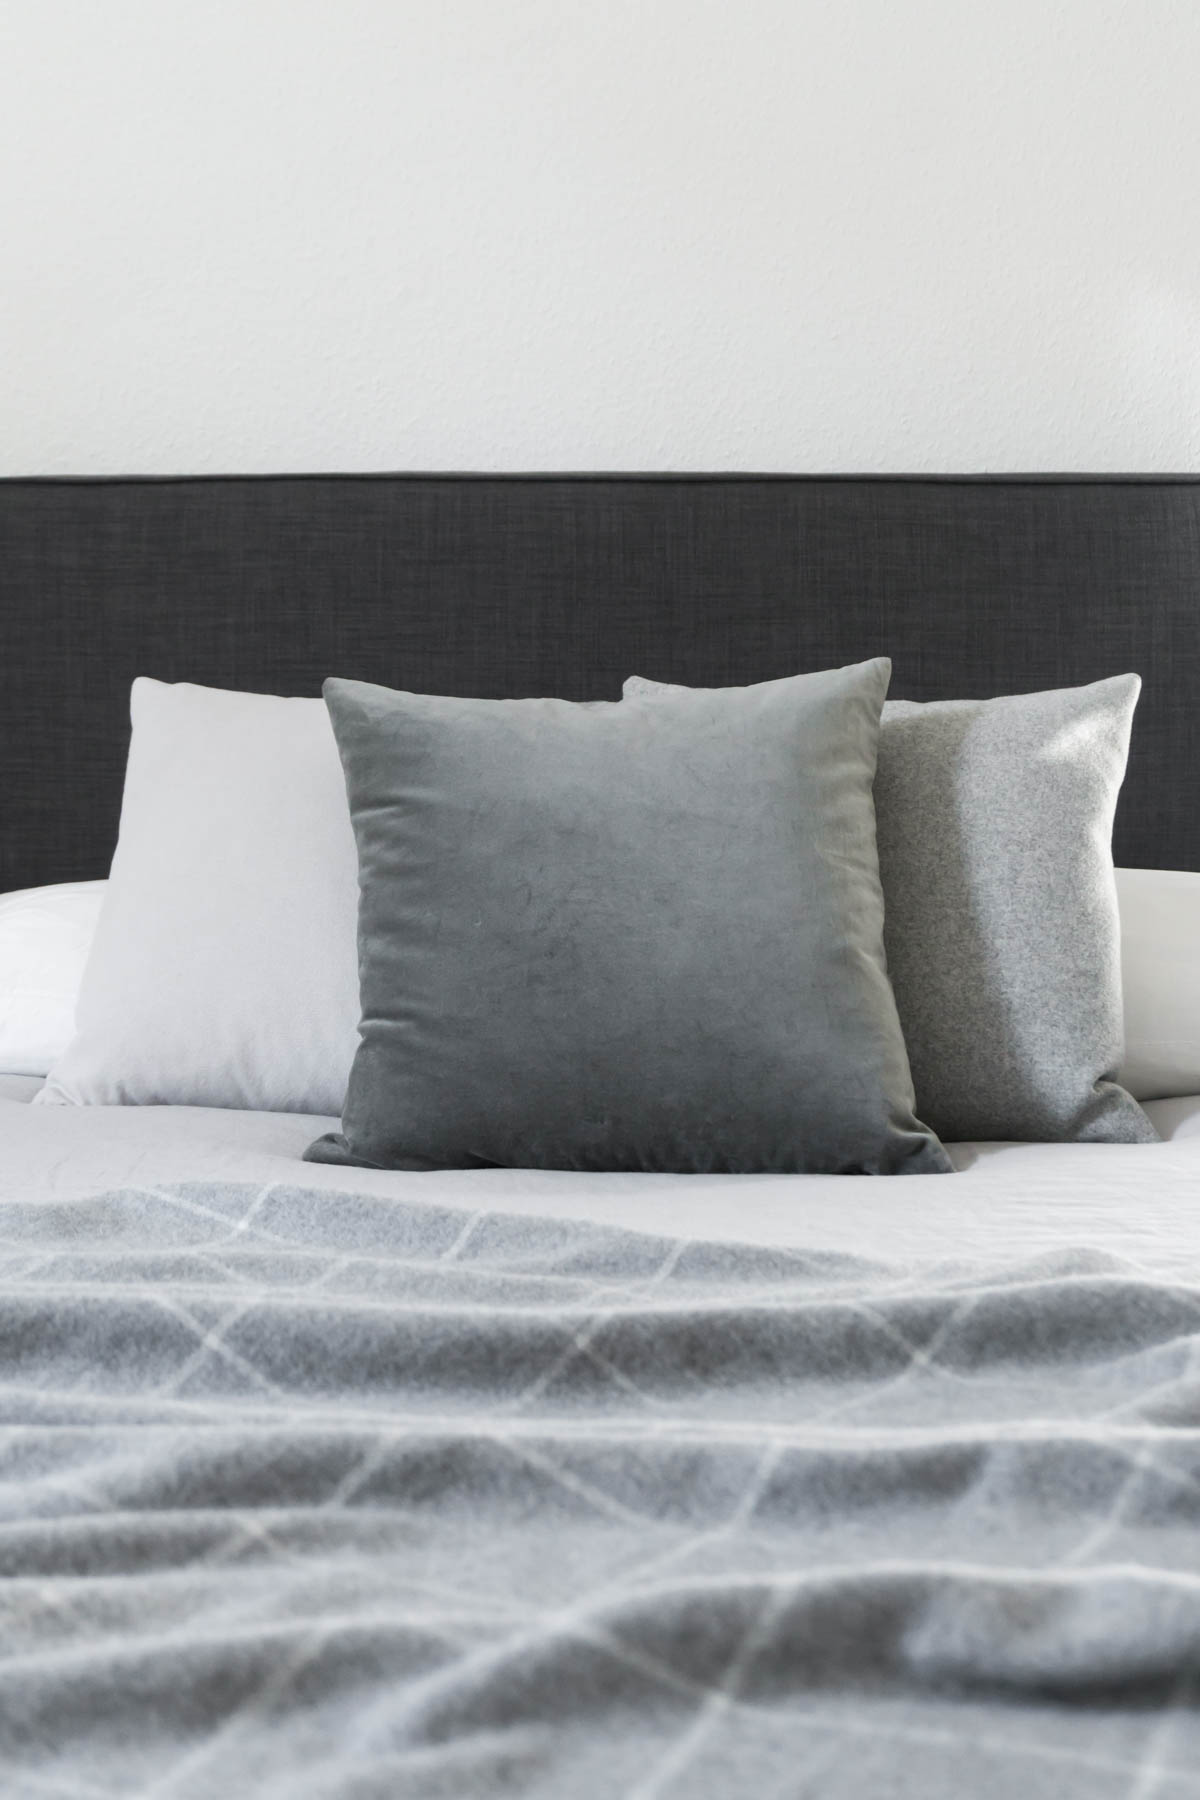 Grey Bedding - Minimalist Bedroom, Scandinavian Design, Calming Interior // RG Daily Blog